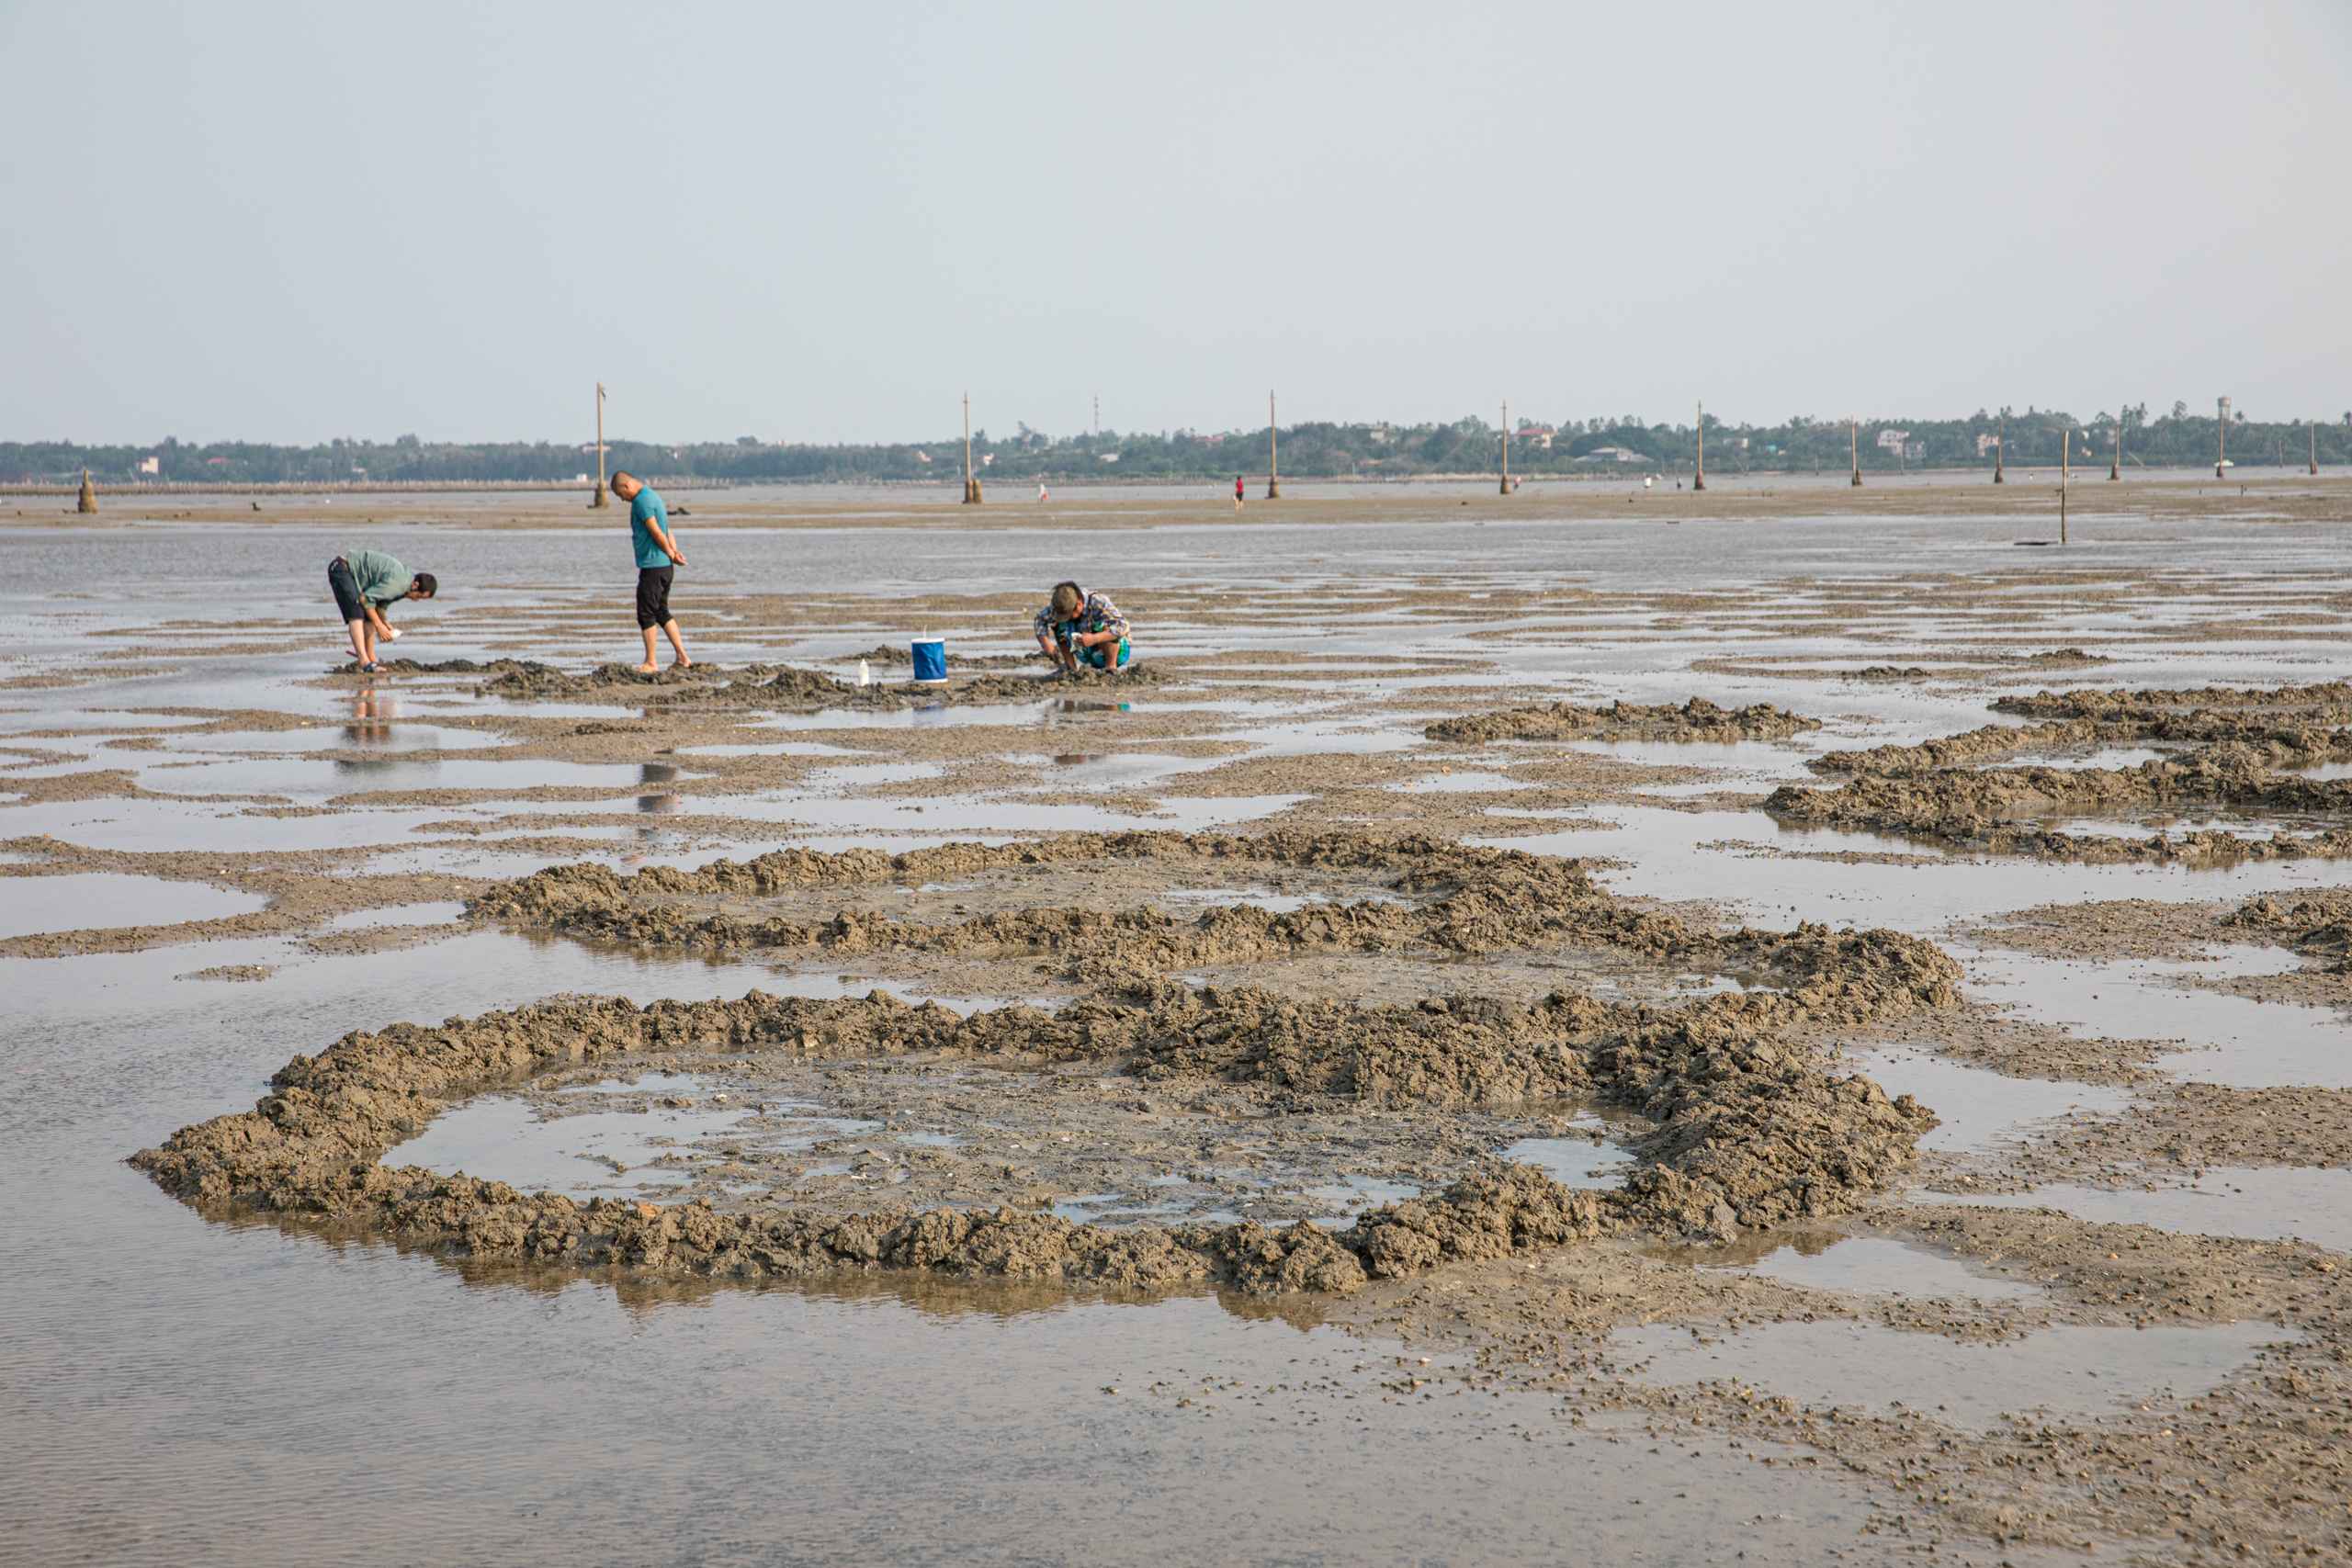 <p>隶属于海南省的北港岛海滨滩涂上，许多游人为了捕获海洋生物，在沙滩和湿地上到处挖掘，被称为“犁地式”赶海。图片来源：陈明智 / 智渔</p>